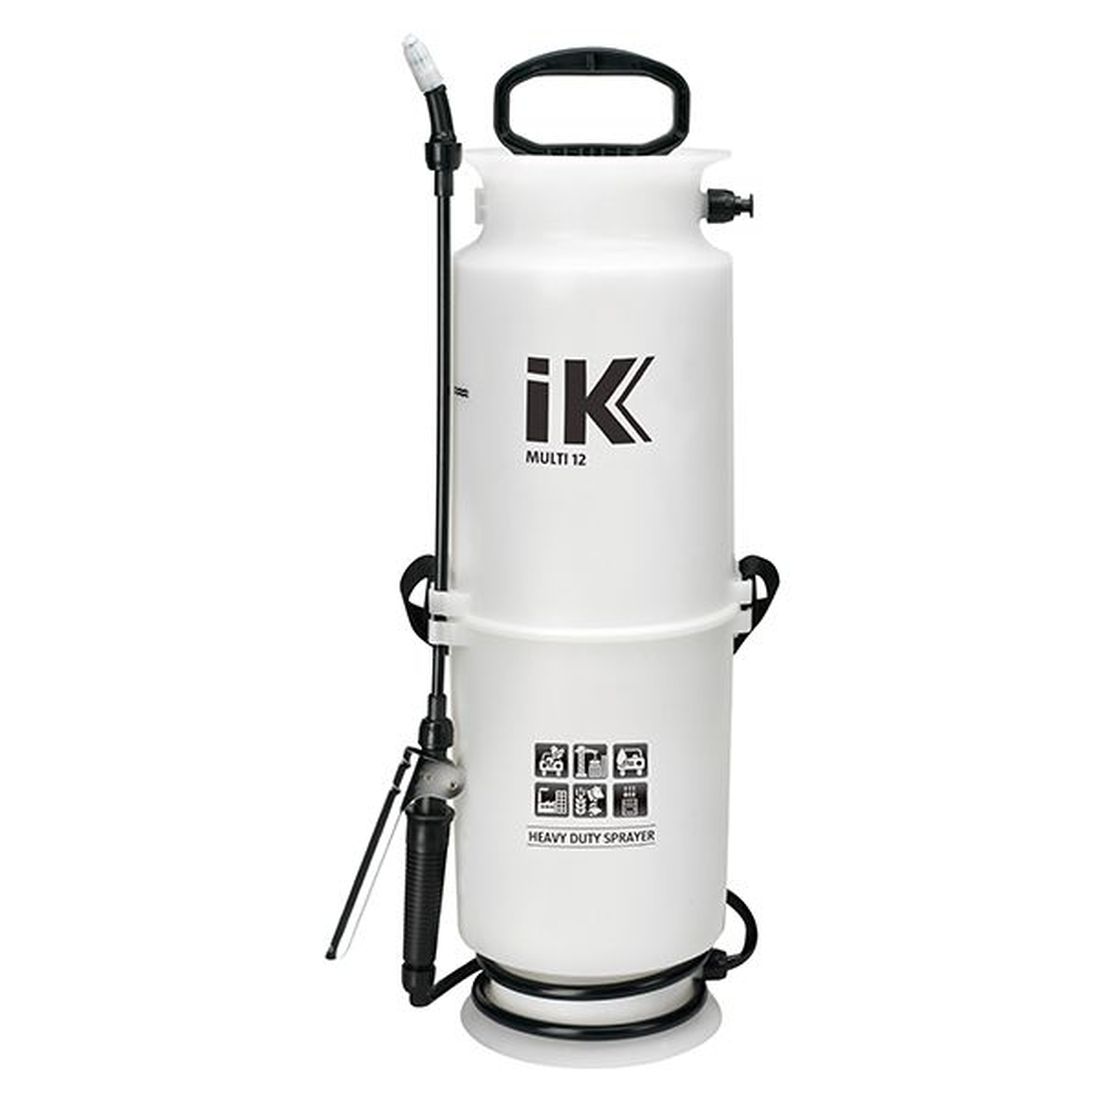 Matabi IK Multi 12 Industrial Sprayer 8 litre                                          